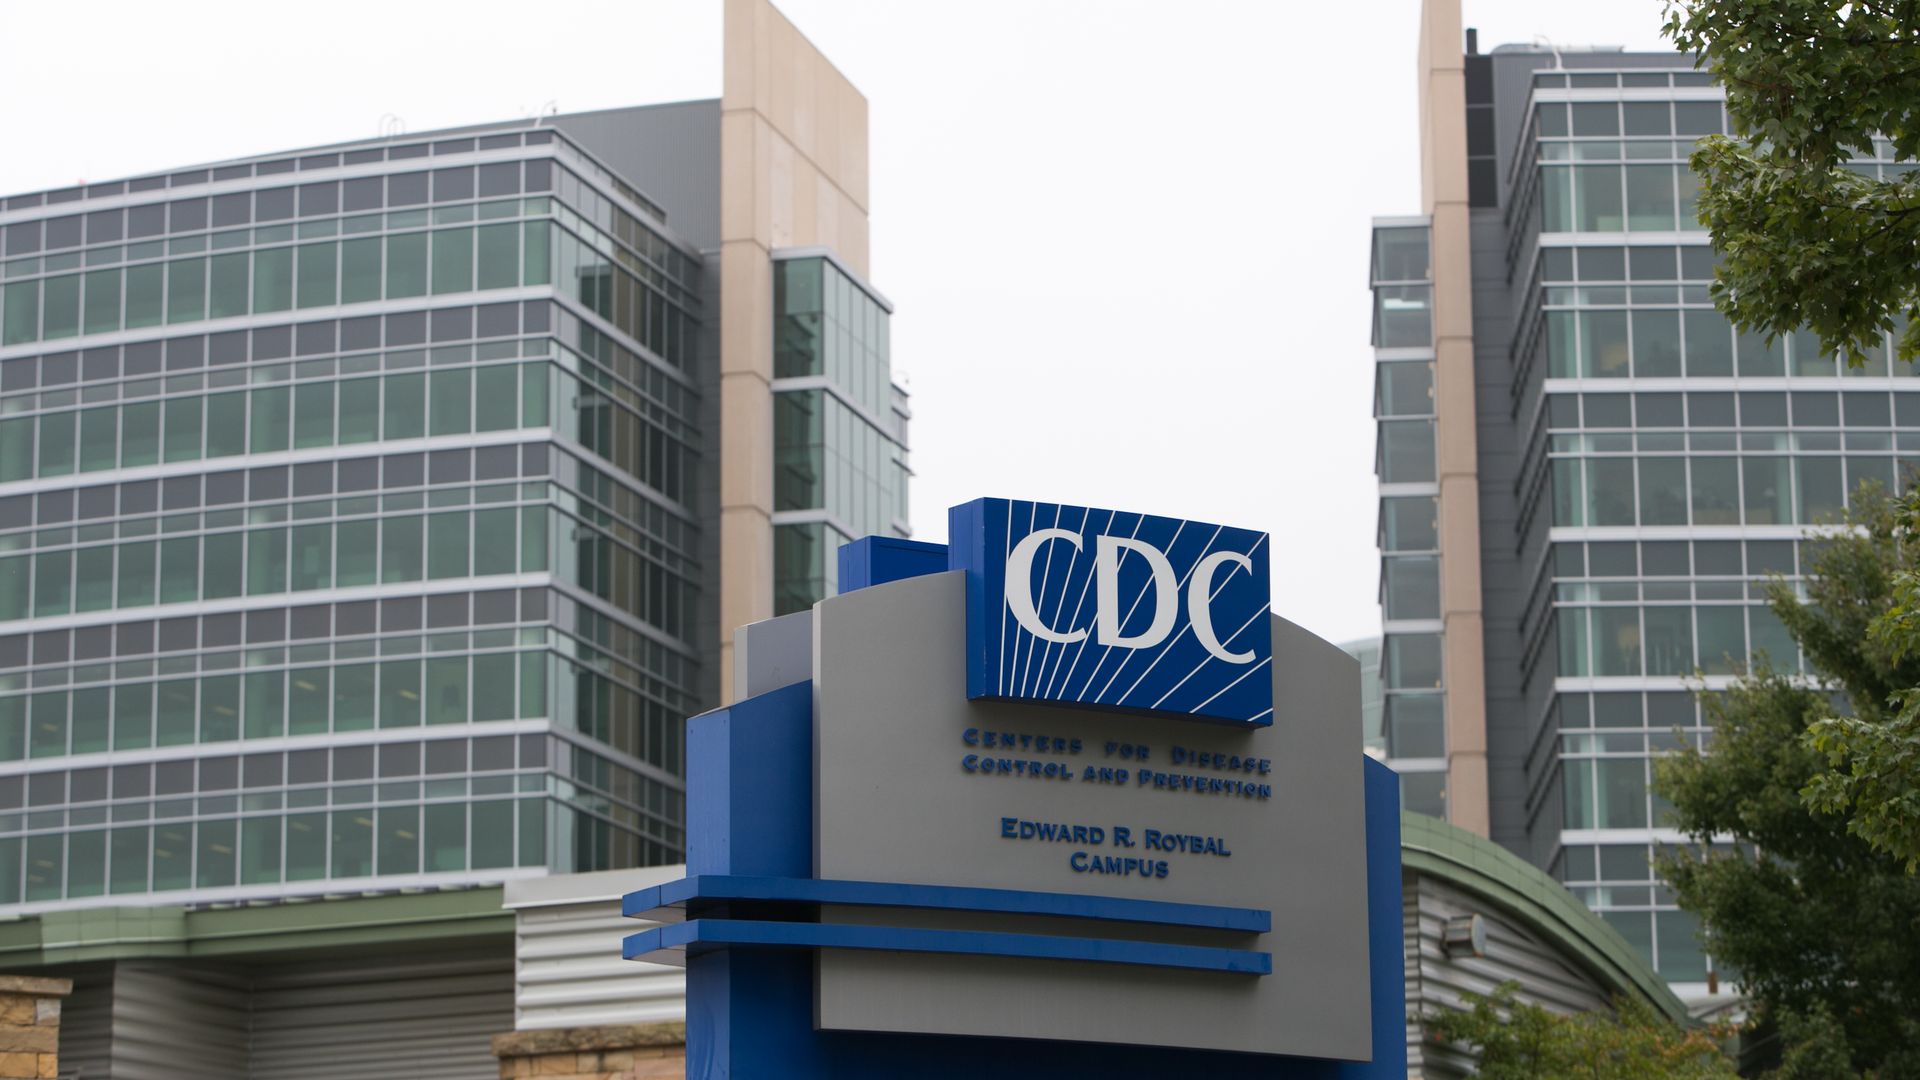 The CDC Headquarters.